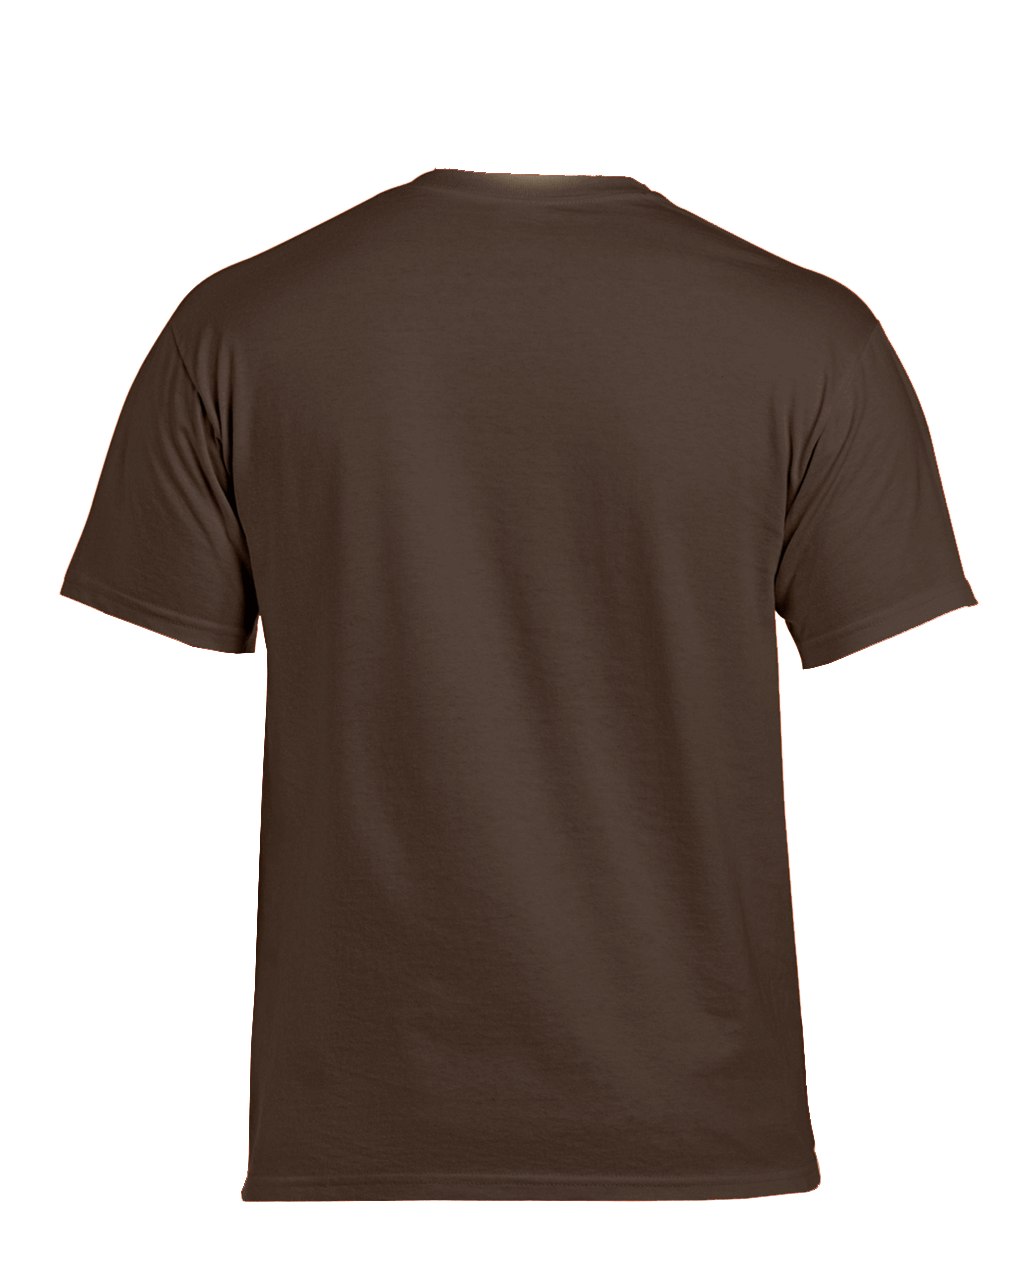 T-Shirt Grunge (Chocolate) – Windsurfer Europe